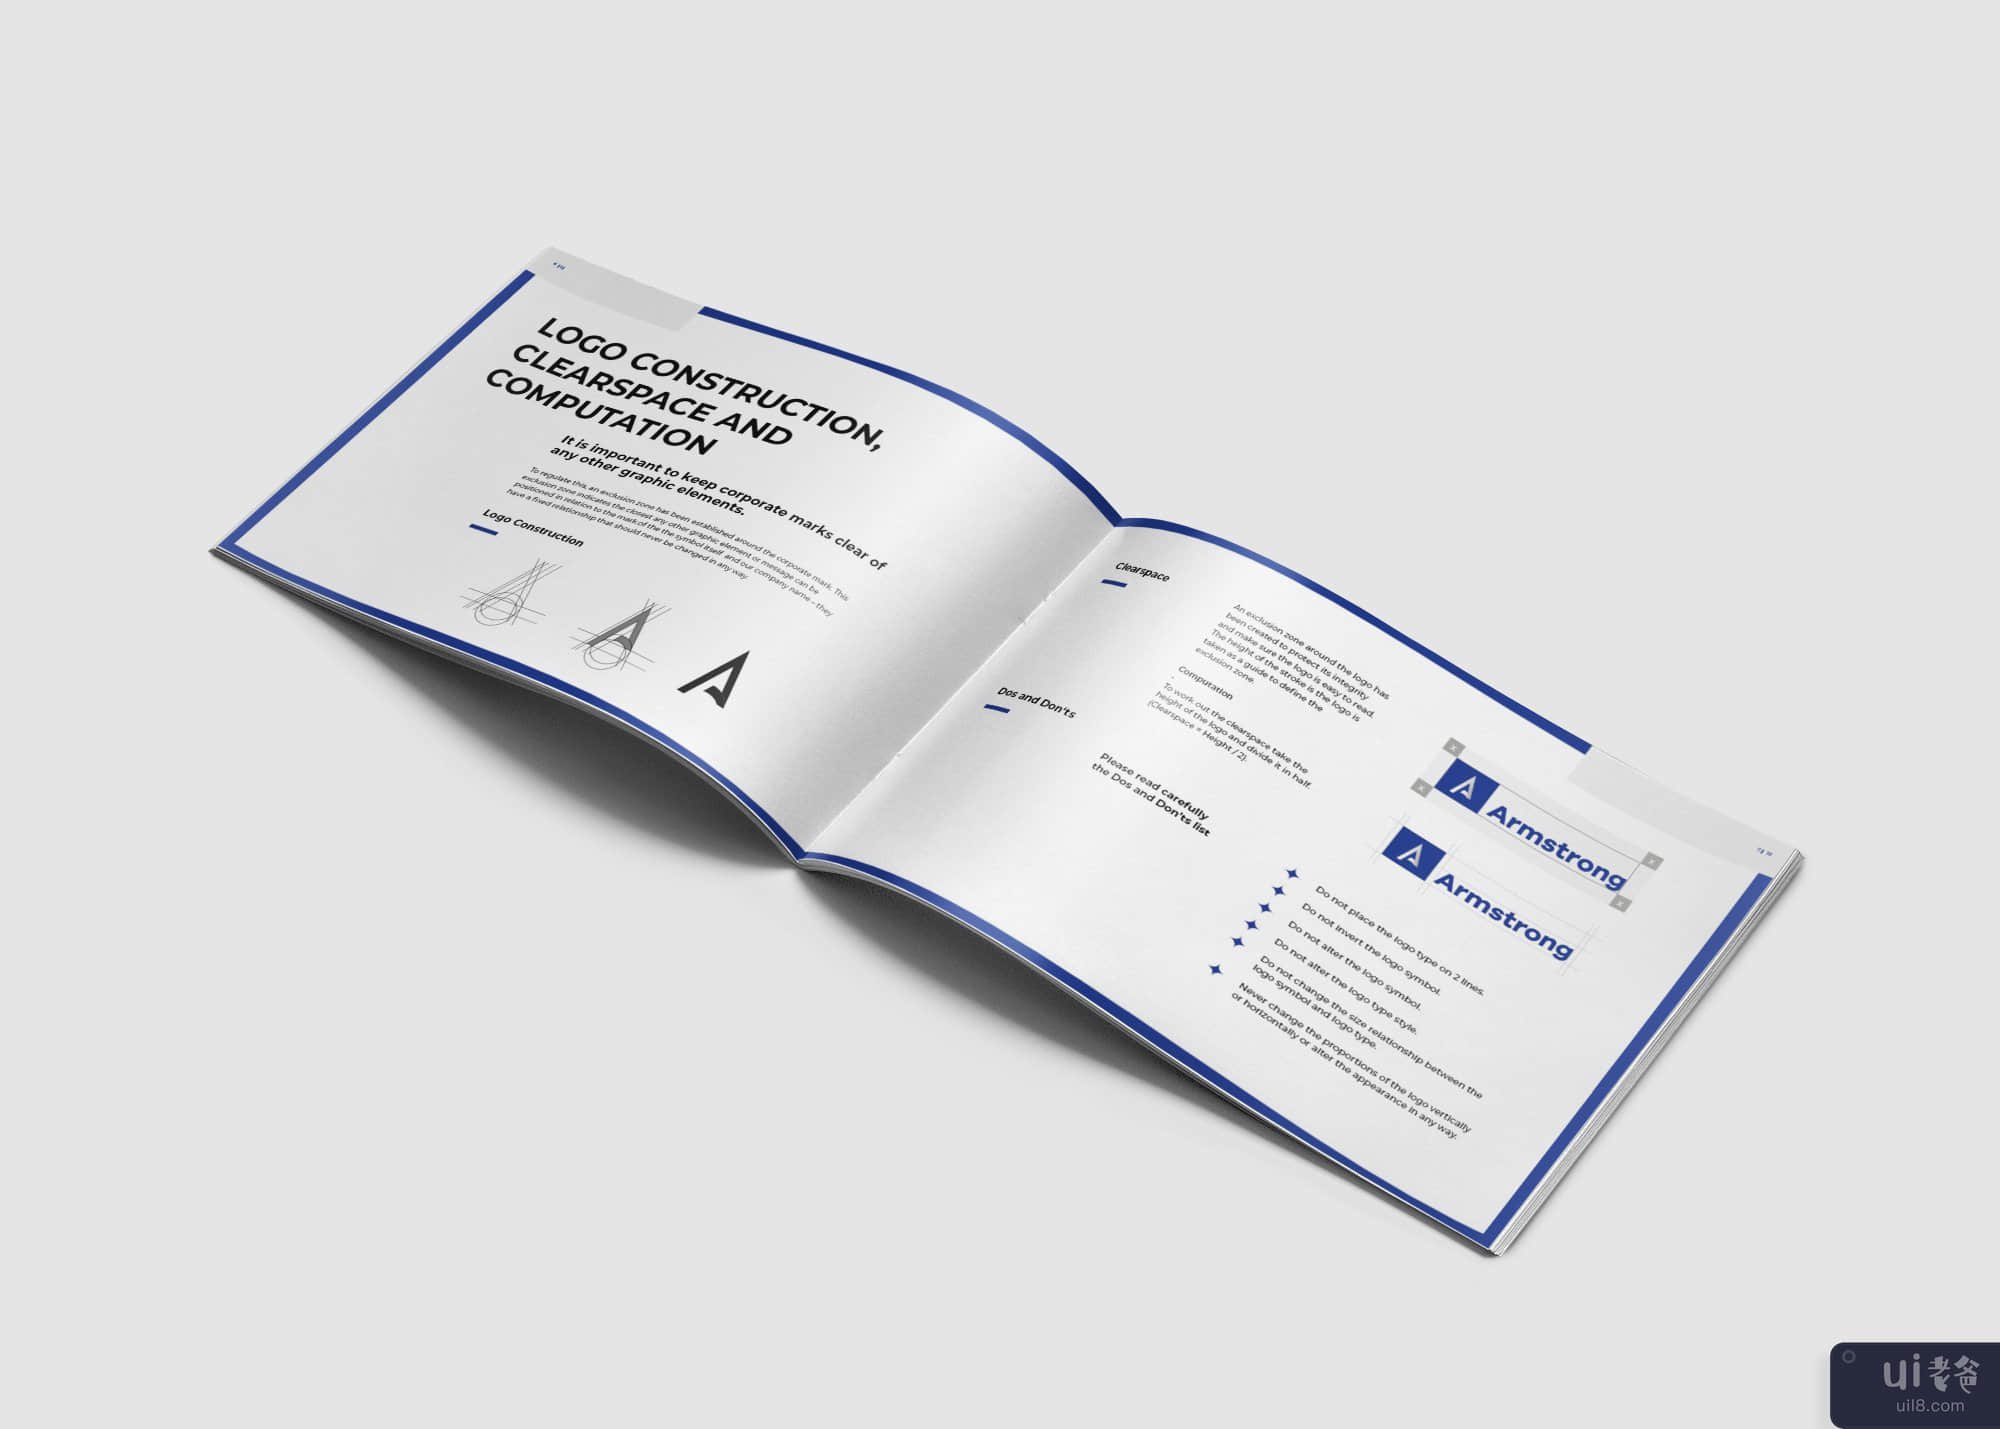 蓝色品牌手册模板宣传册|设计模板(Blue Brand Manual Template Brochure| Indesign Template)插图9